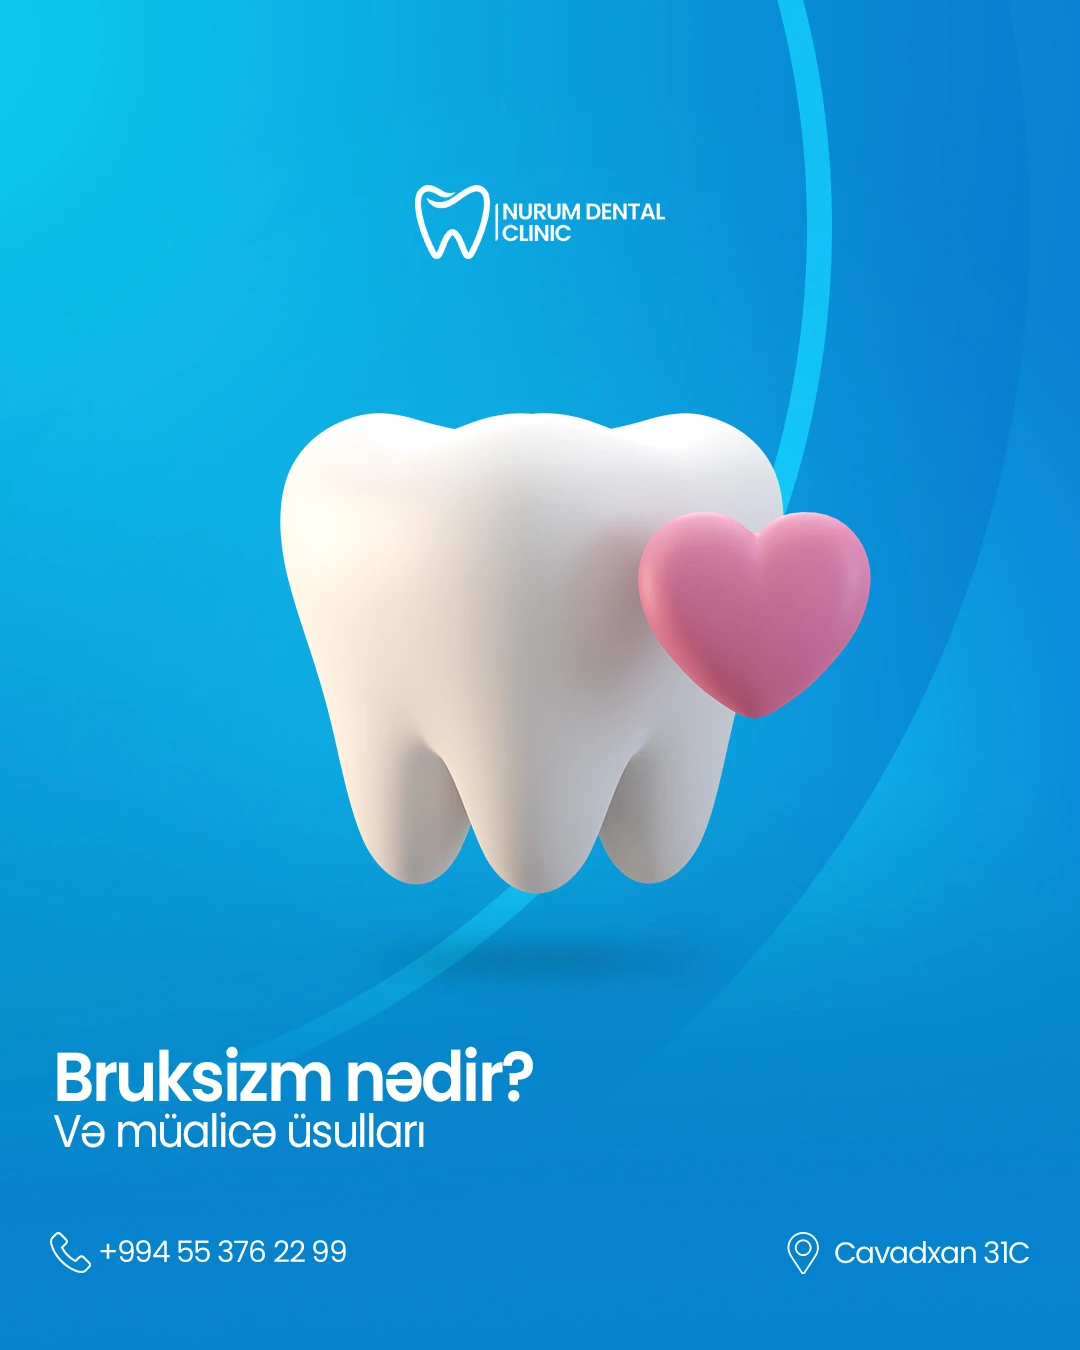 Nurum Dental Clinic - Social Media Posters